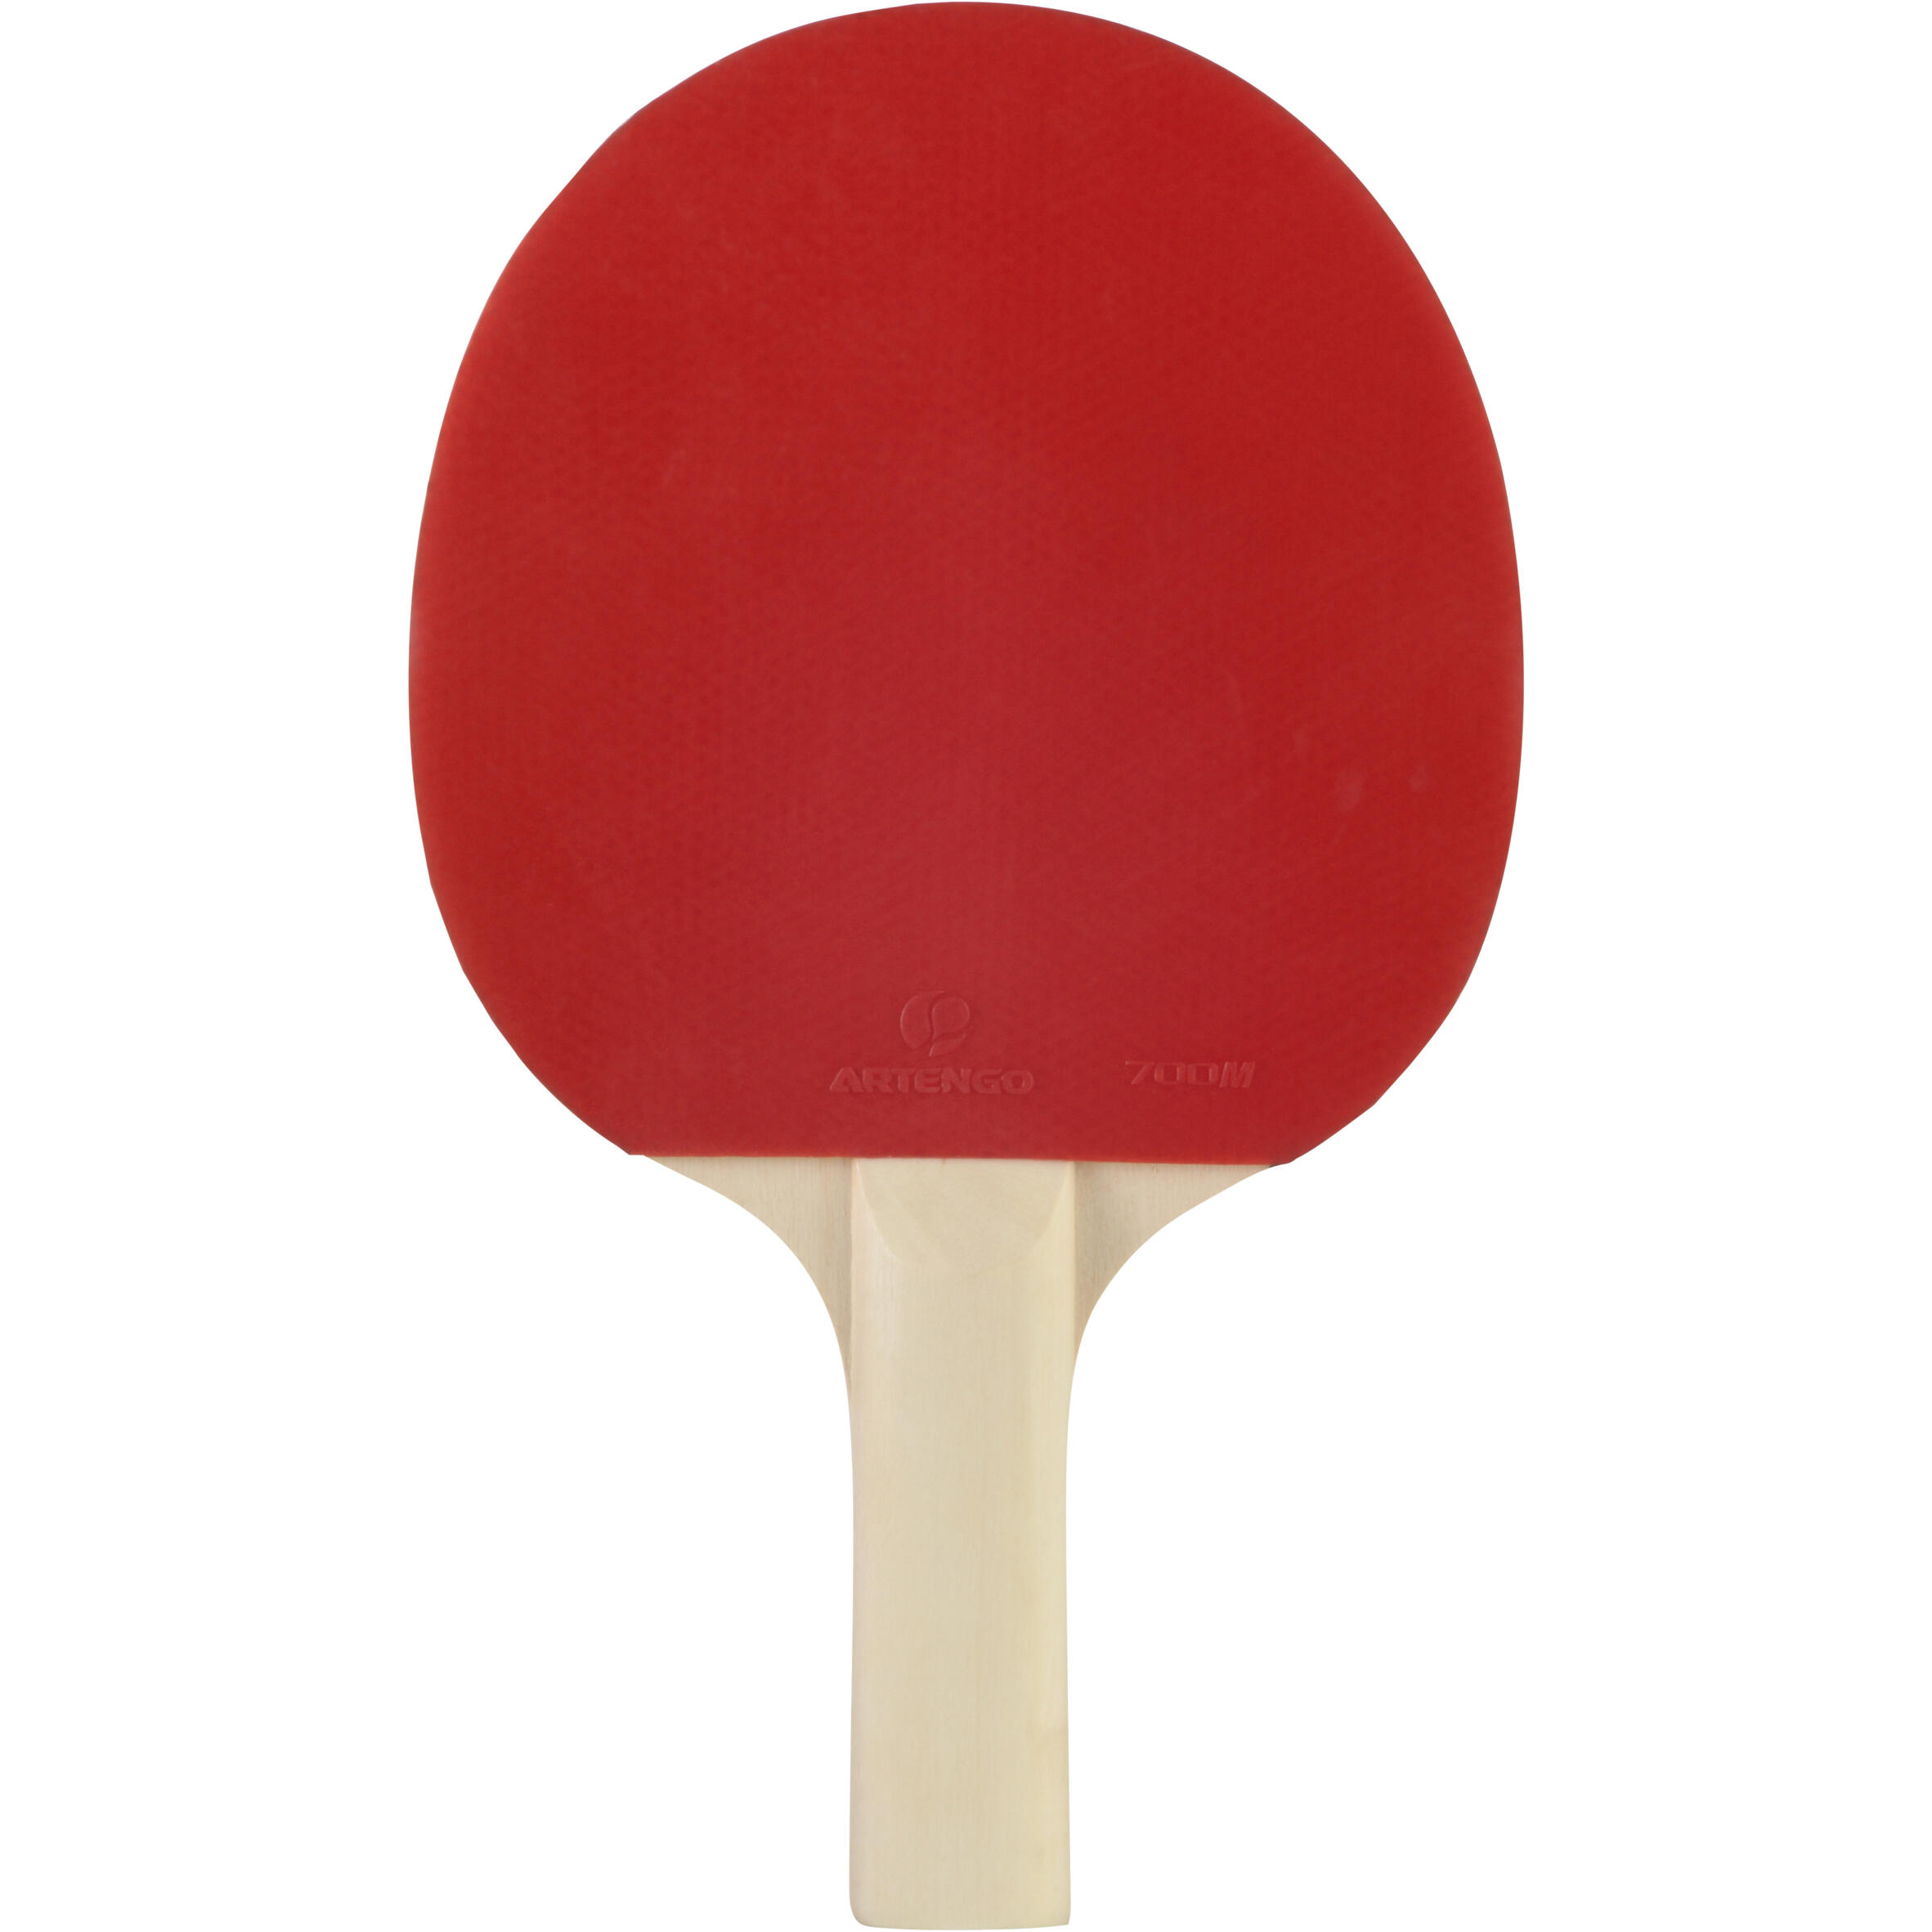 pongori table tennis racket